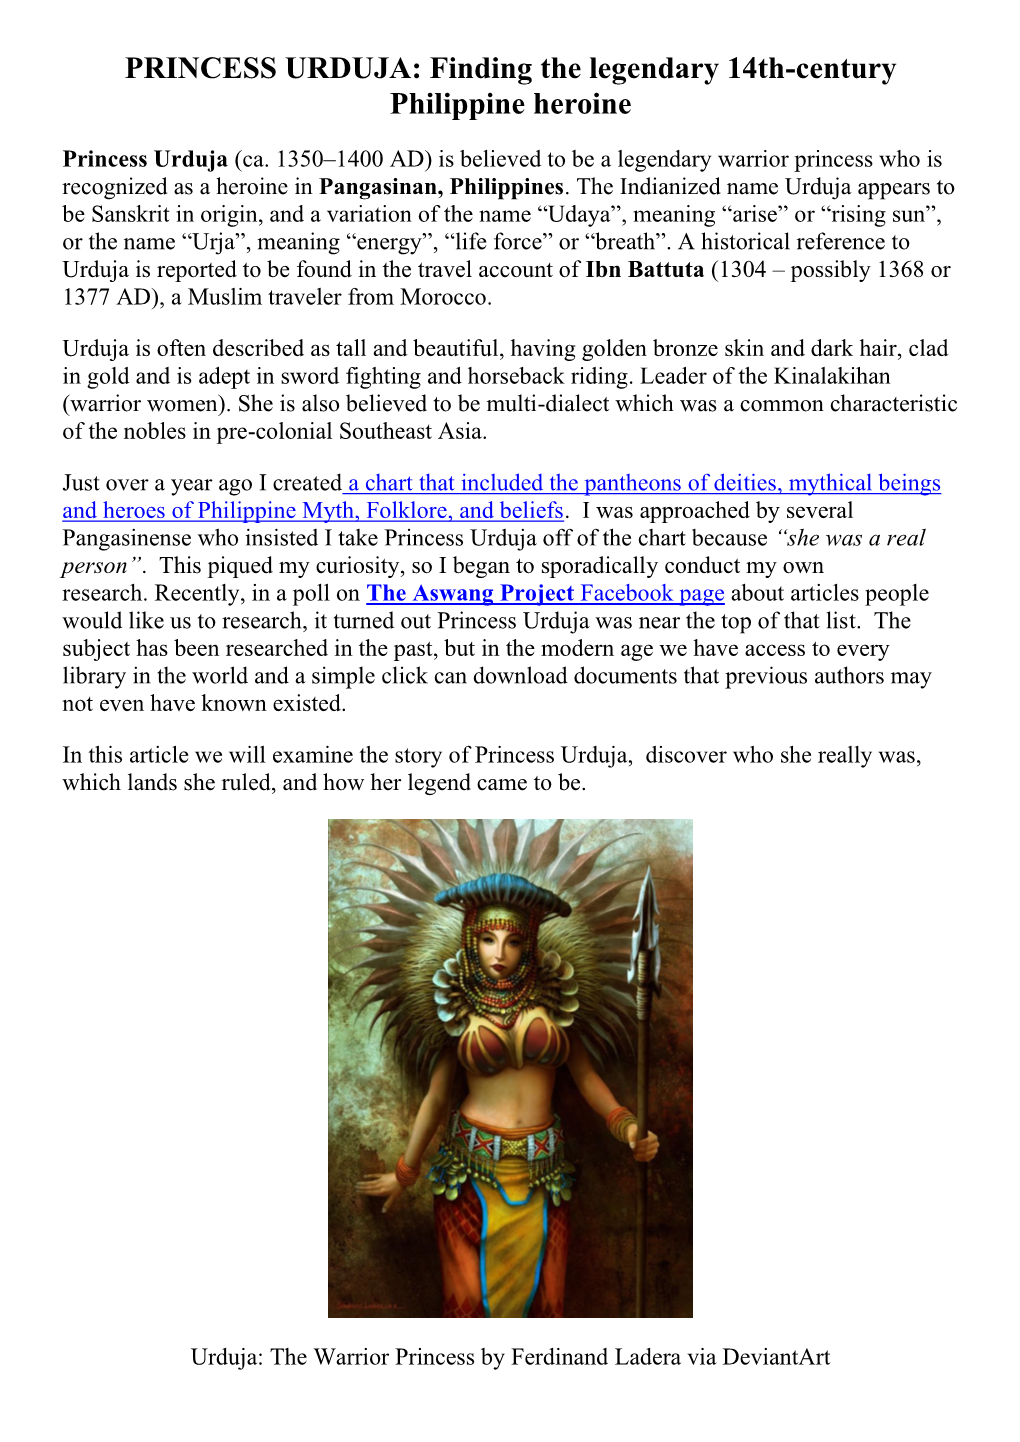 PRINCESS URDUJA: Finding the Legendary 14Th-Century Philippine Heroine